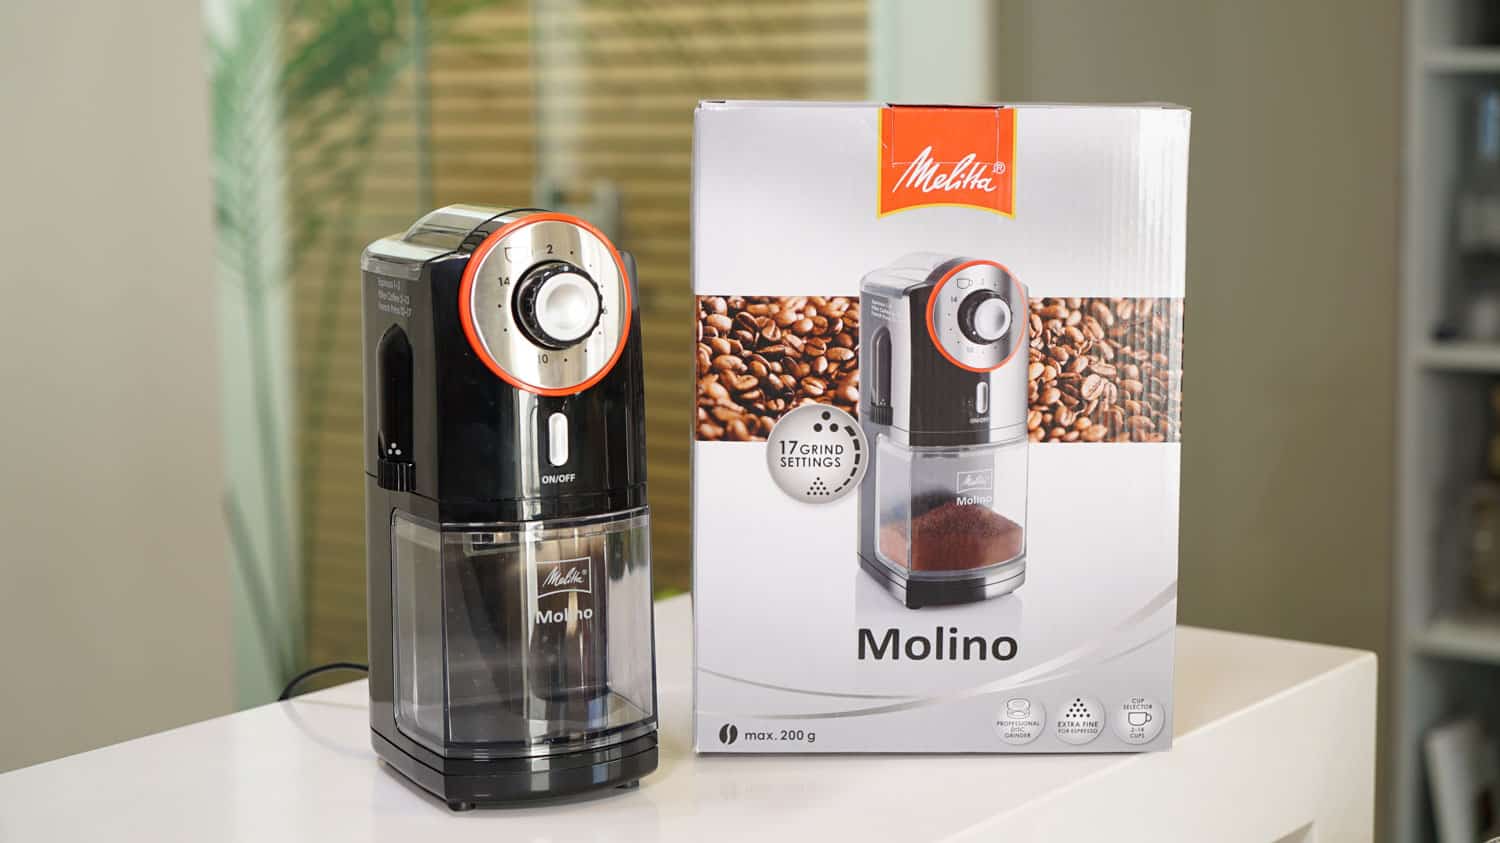 vrede zonsopkomst Raad Melitta Molino koffiemolen review » Vivakoffie